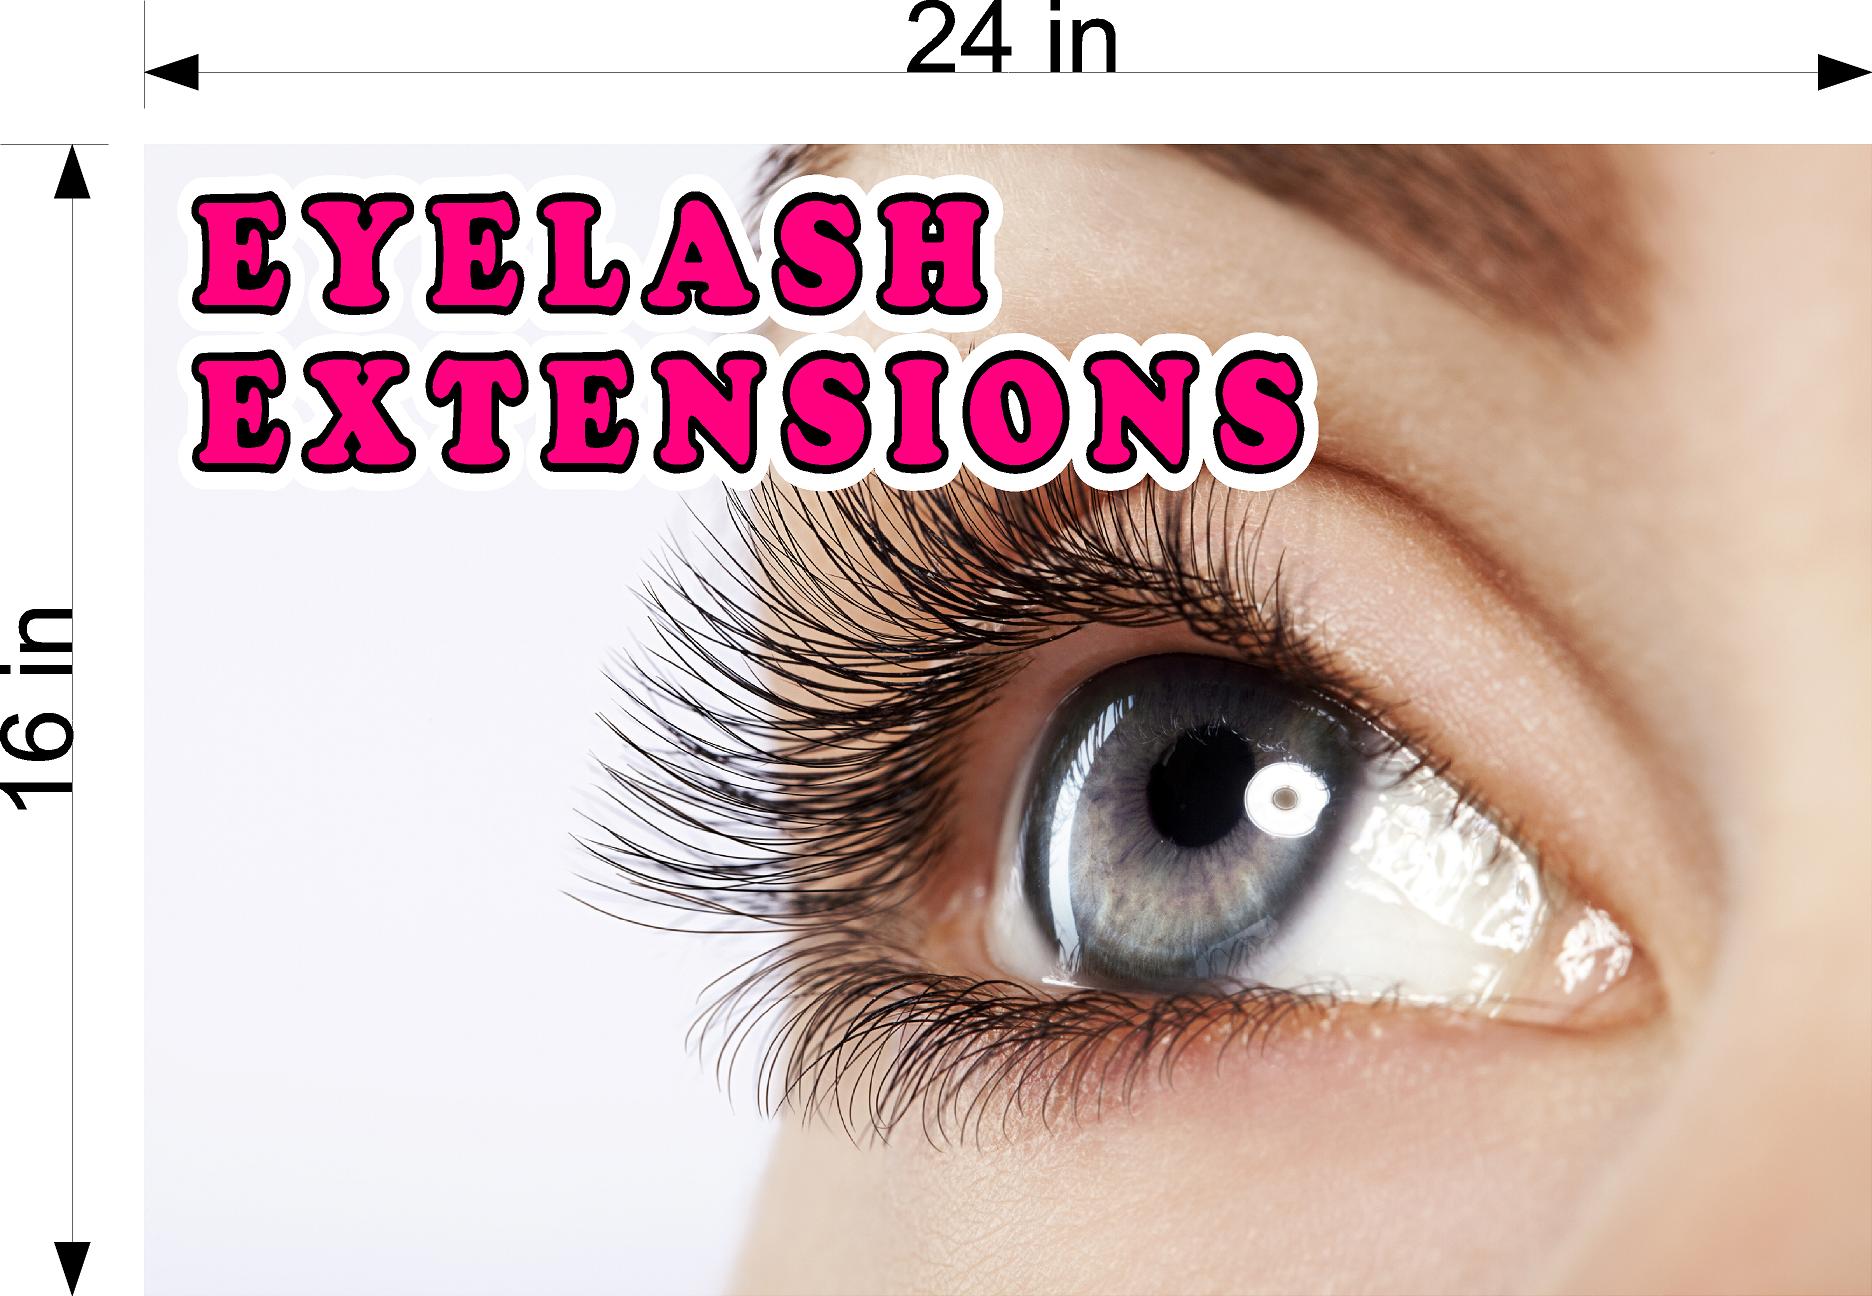 Eyelash 09 Photo-Realistic Paper Poster Premium Interior Inside Sign Advertising Marketing Wall Window Non-Laminated Extensions Horizontal